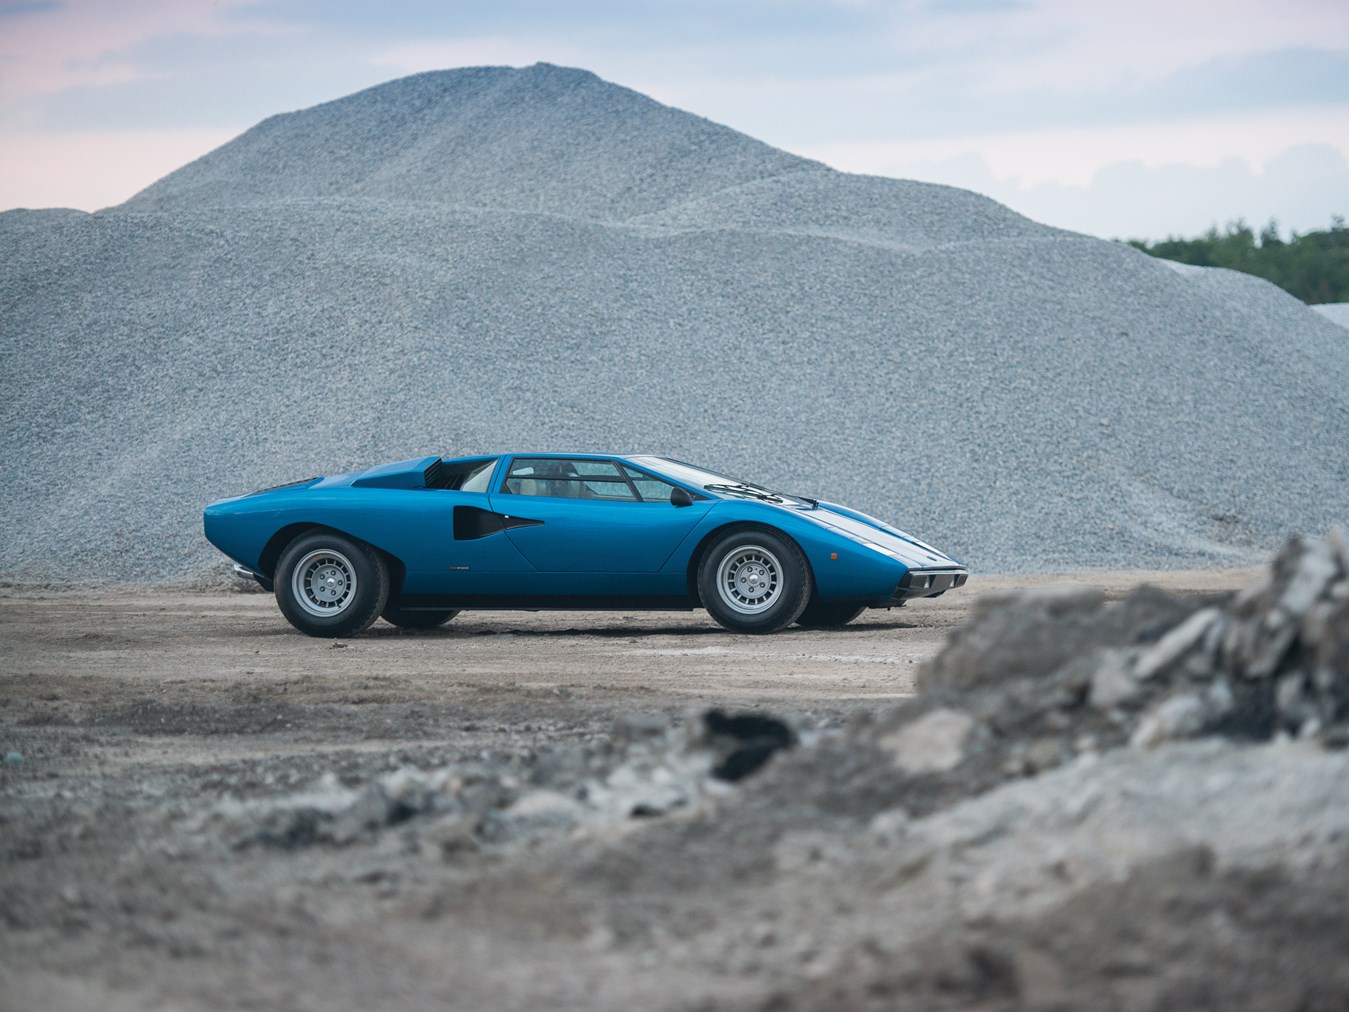 Lamborghini Countach, Classic car, Blue cars Wallpaper